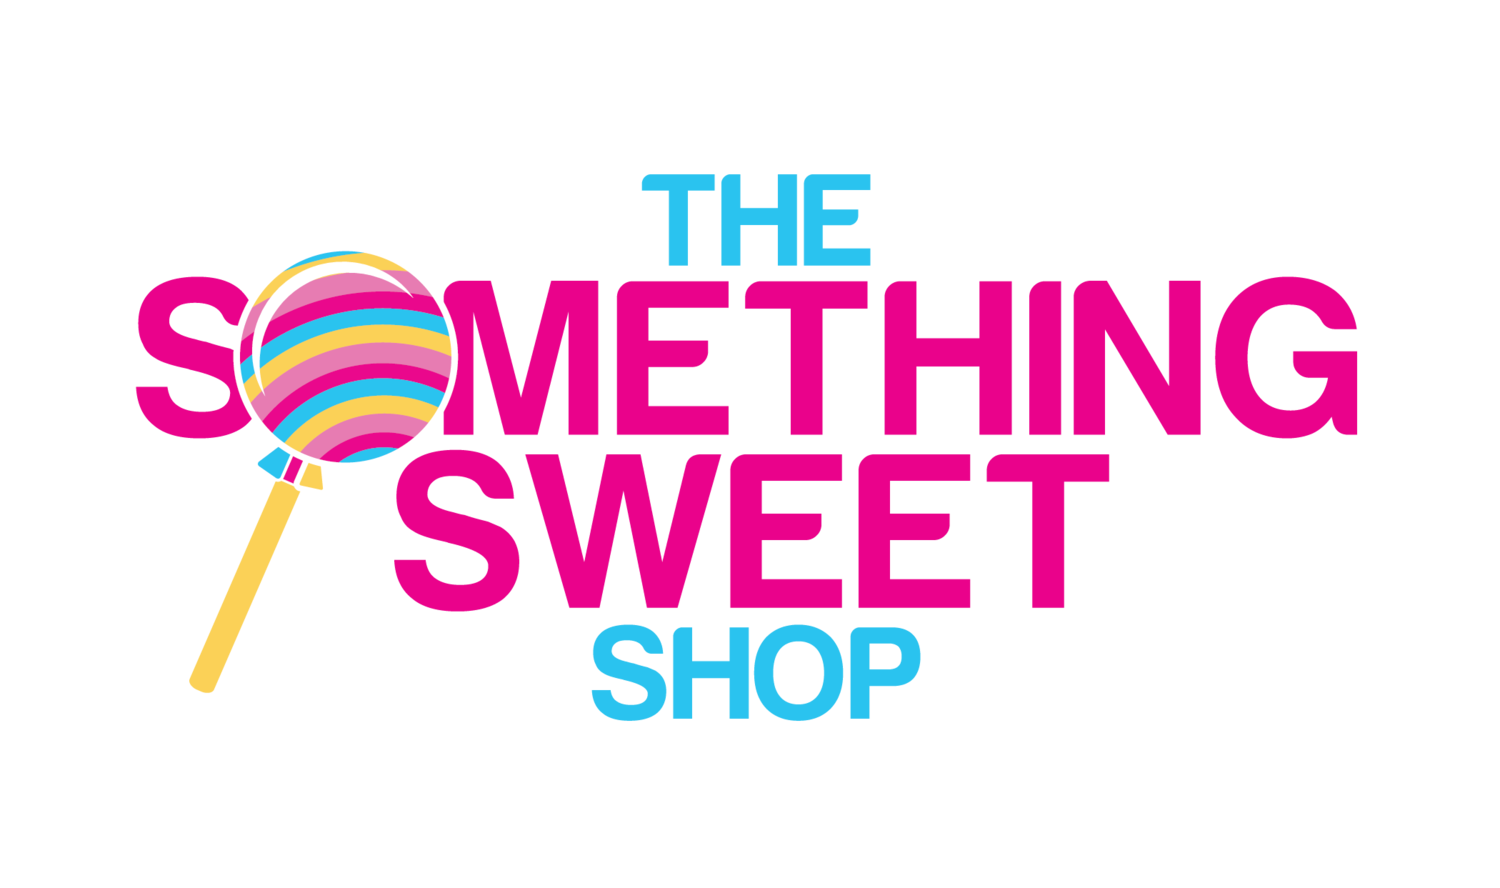 The Something Sweet Shop